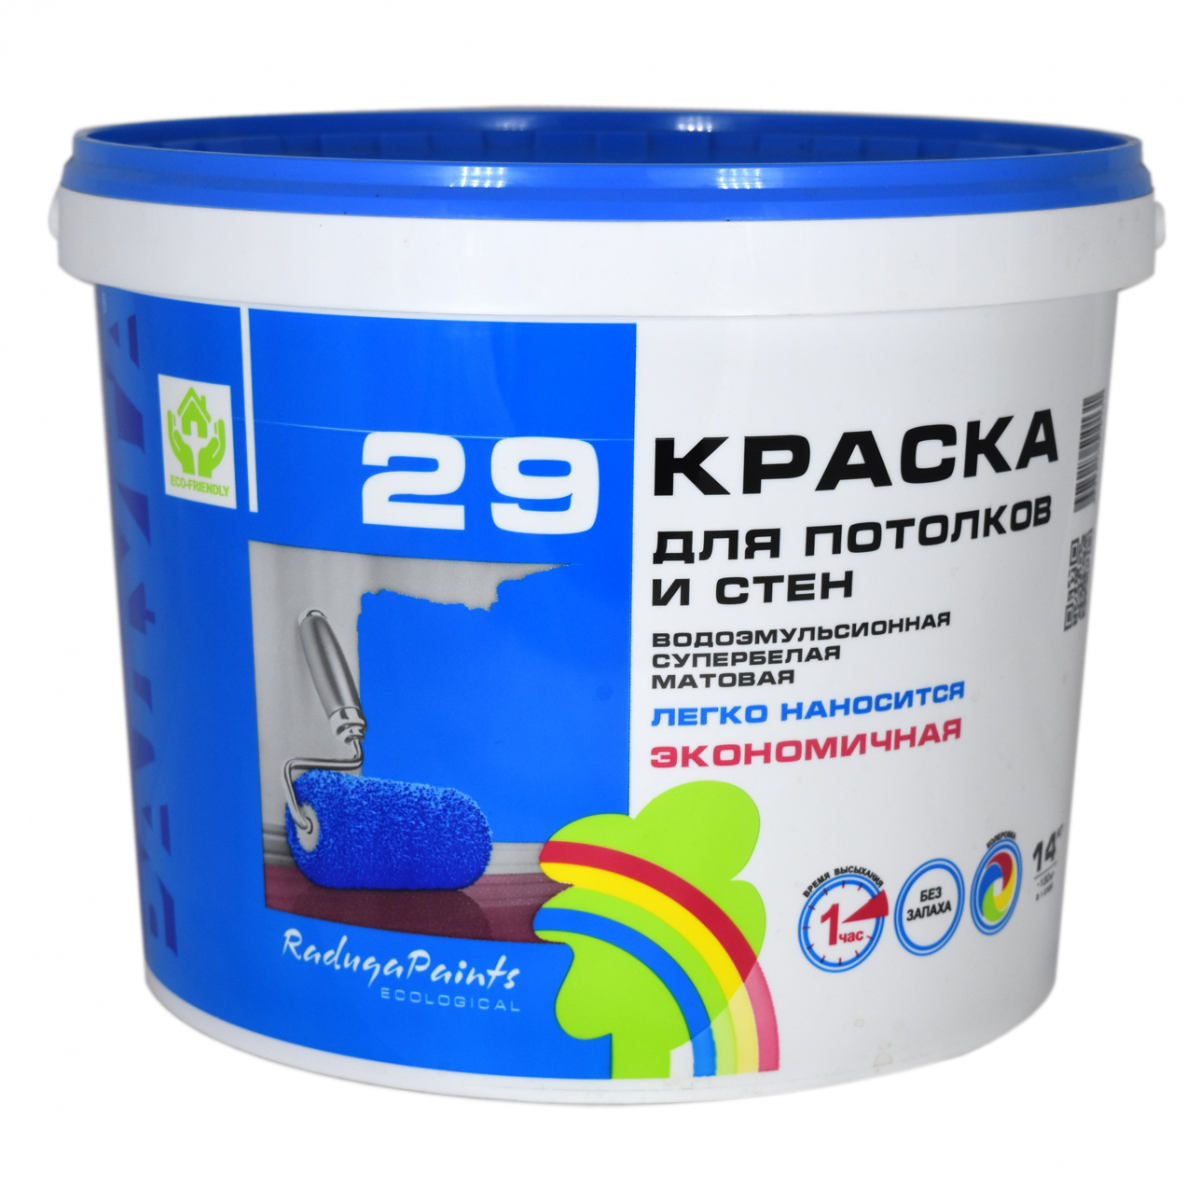 Краска для потолков и стен РАДУГА ВД-29